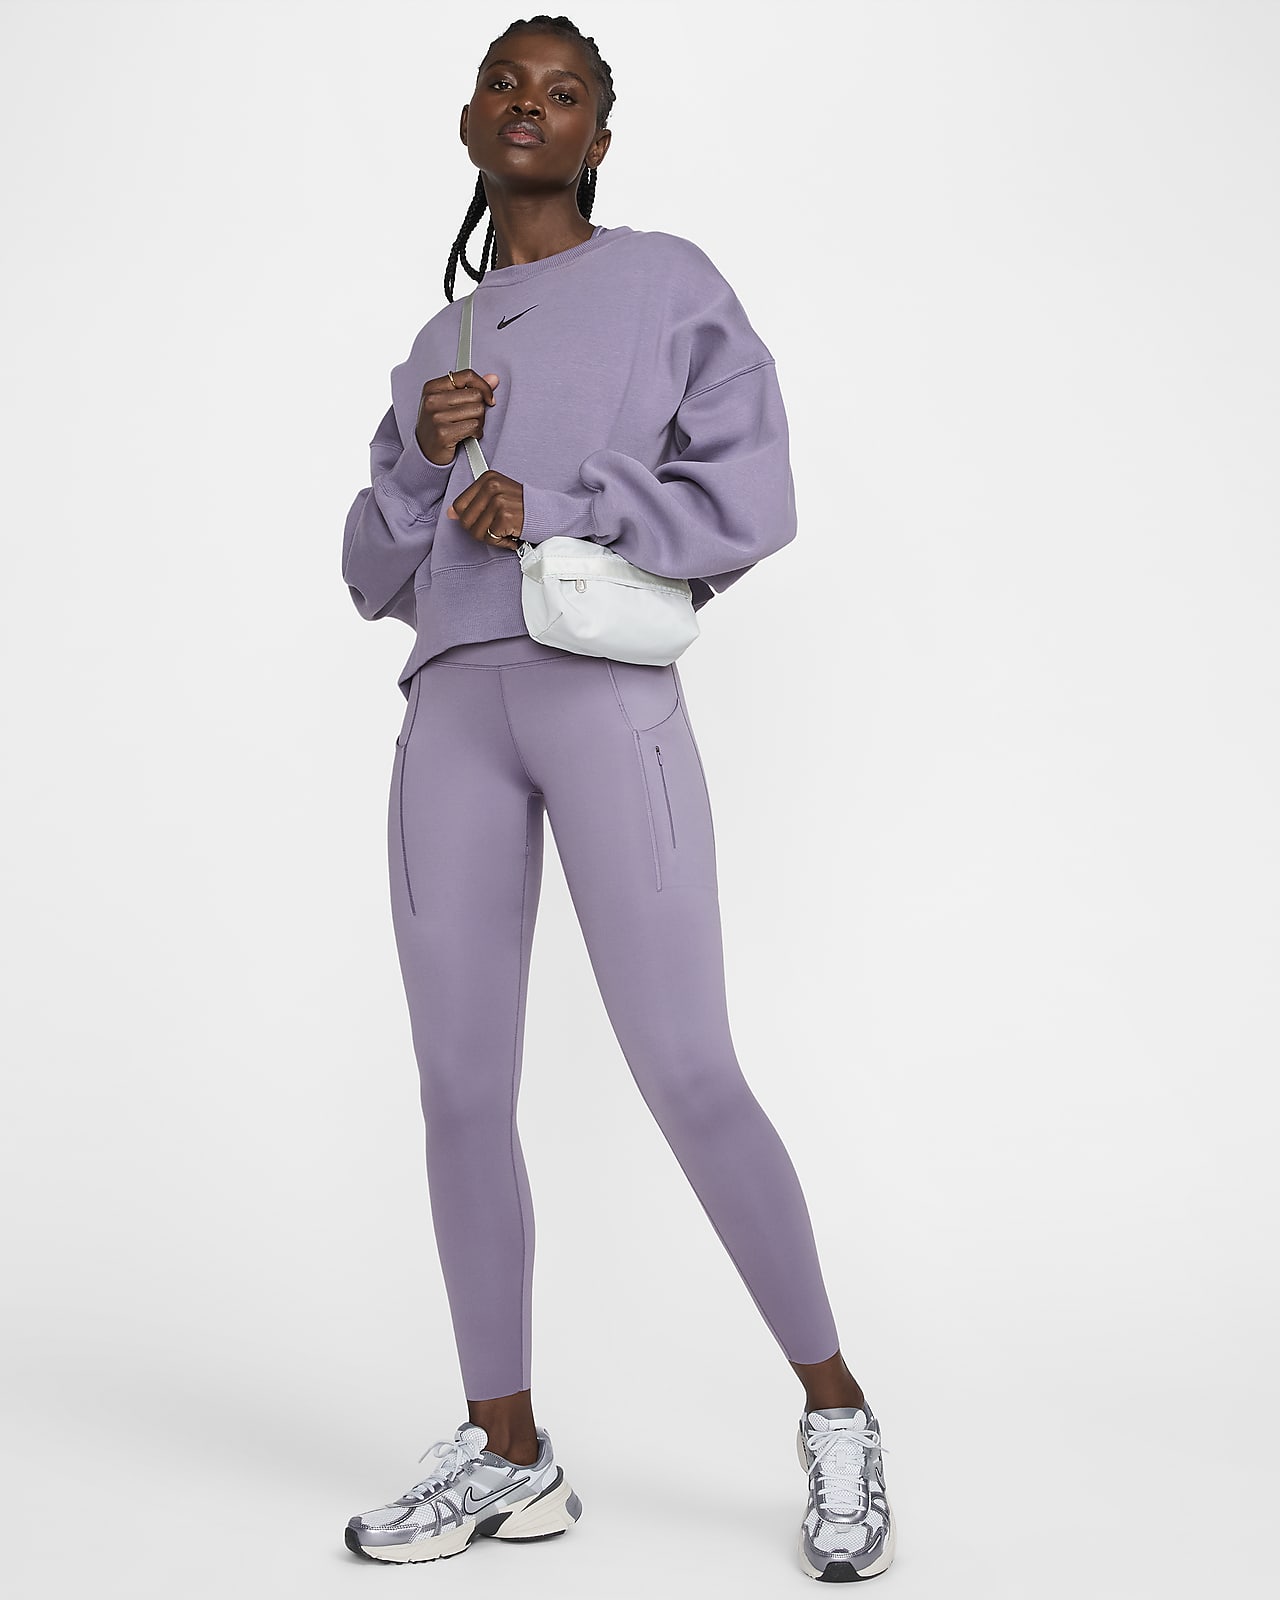 Nike Go-7/8-leggings med højt støtteniveau, mellemhøj talje og lommer til kvinder